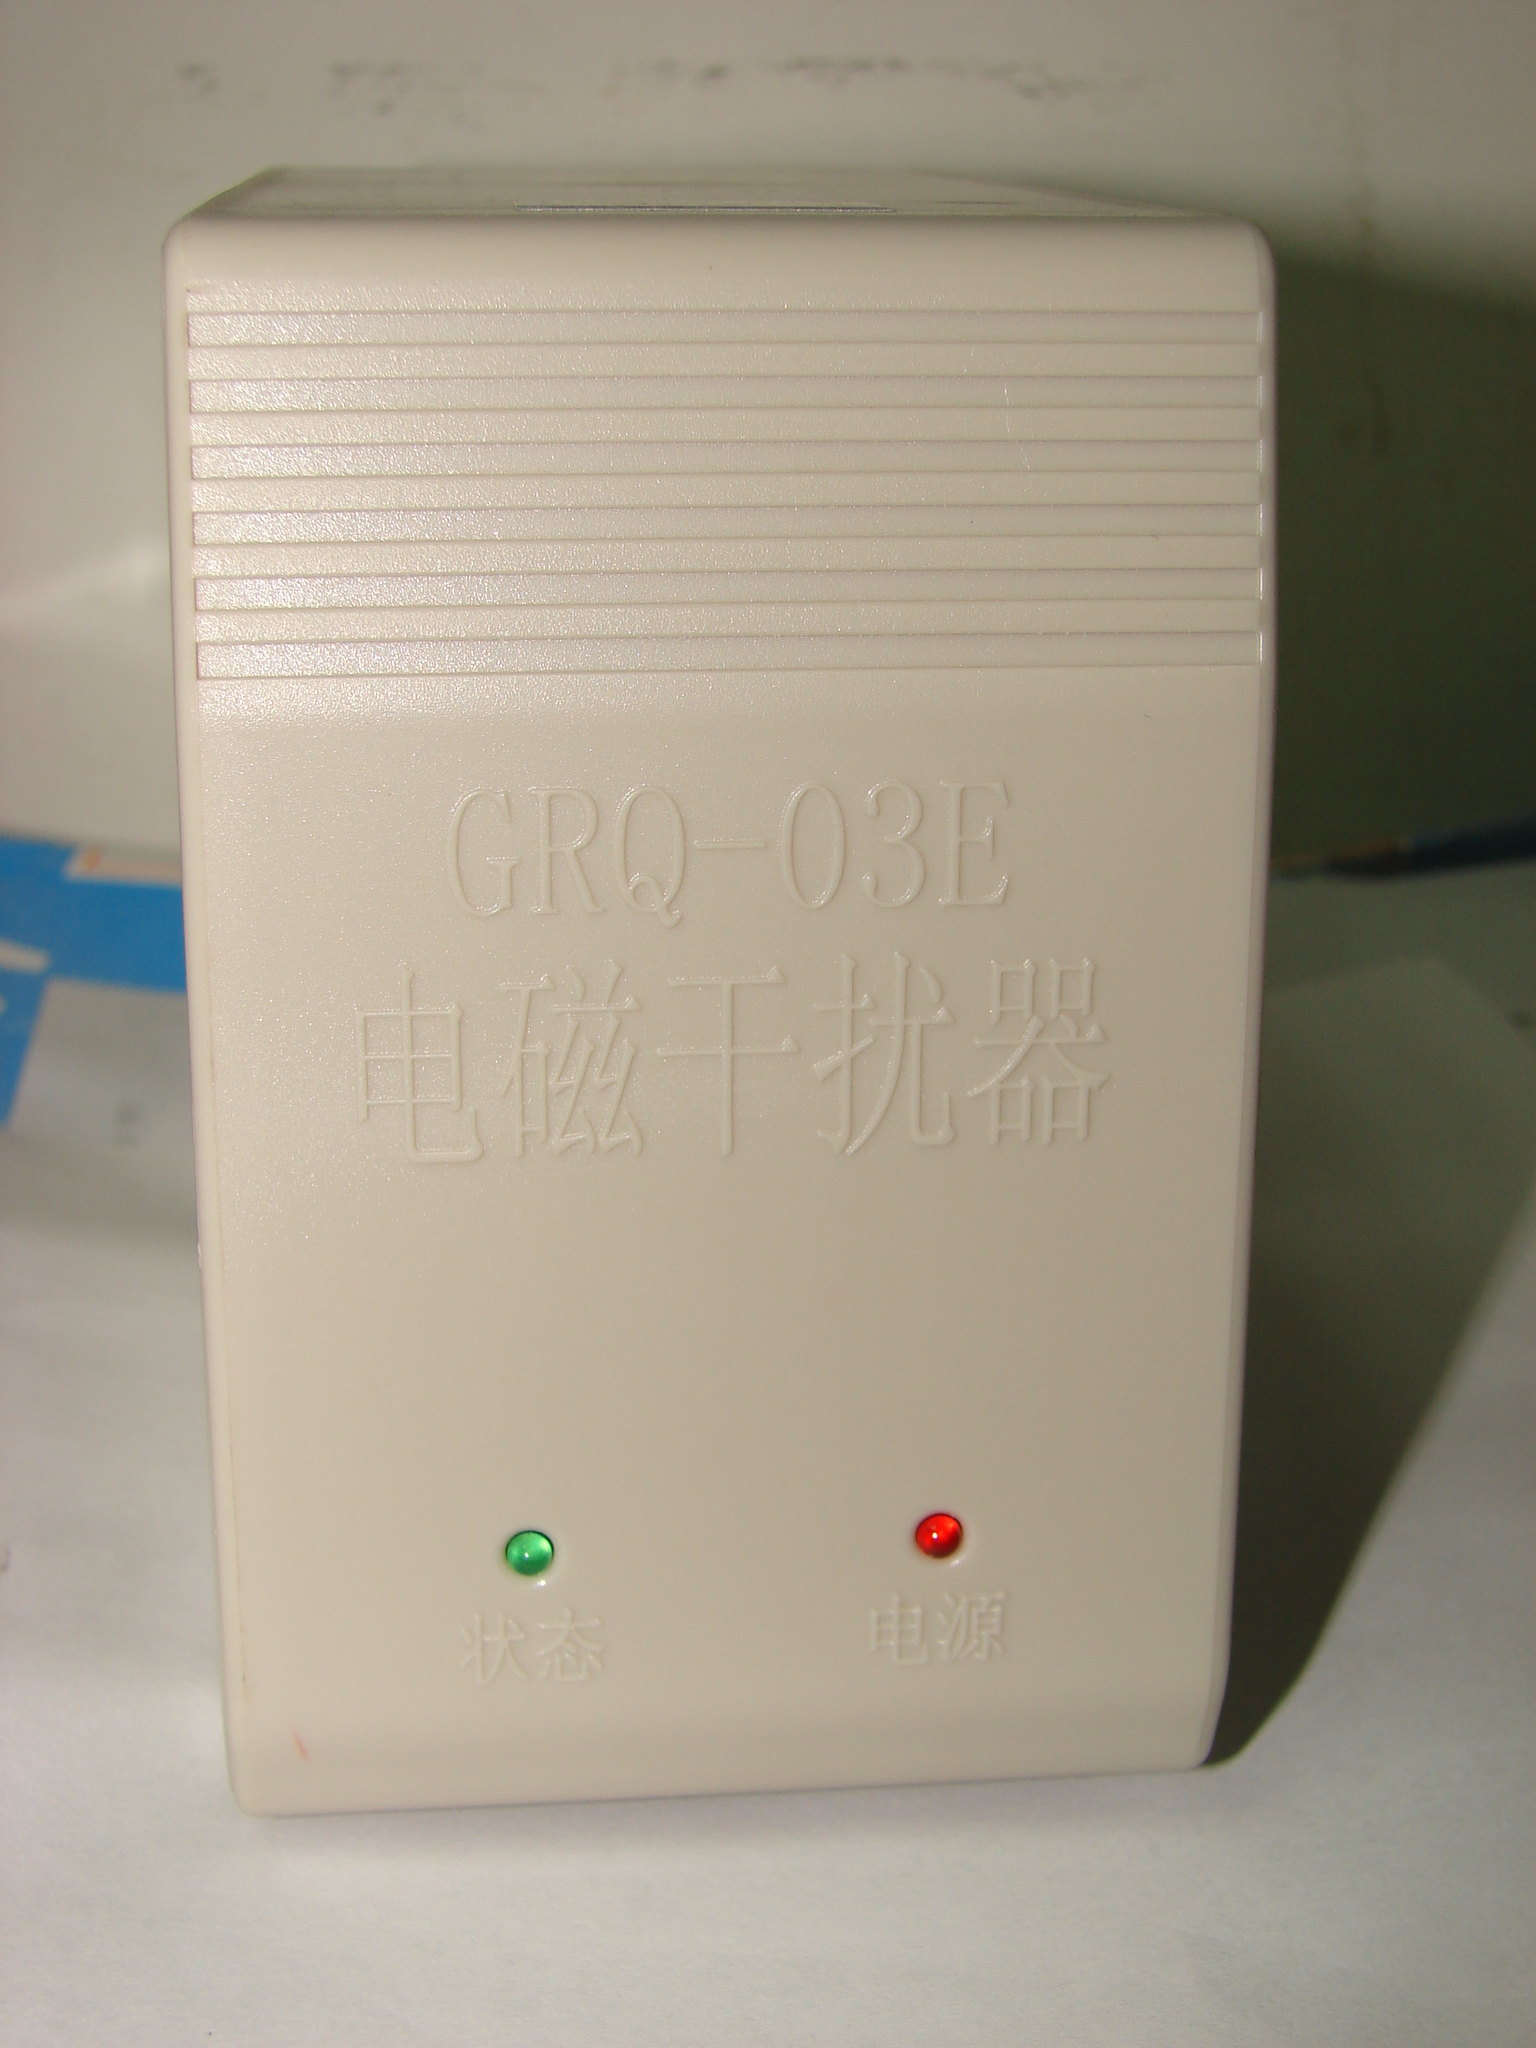 GRQ-03E�算�C干�_器